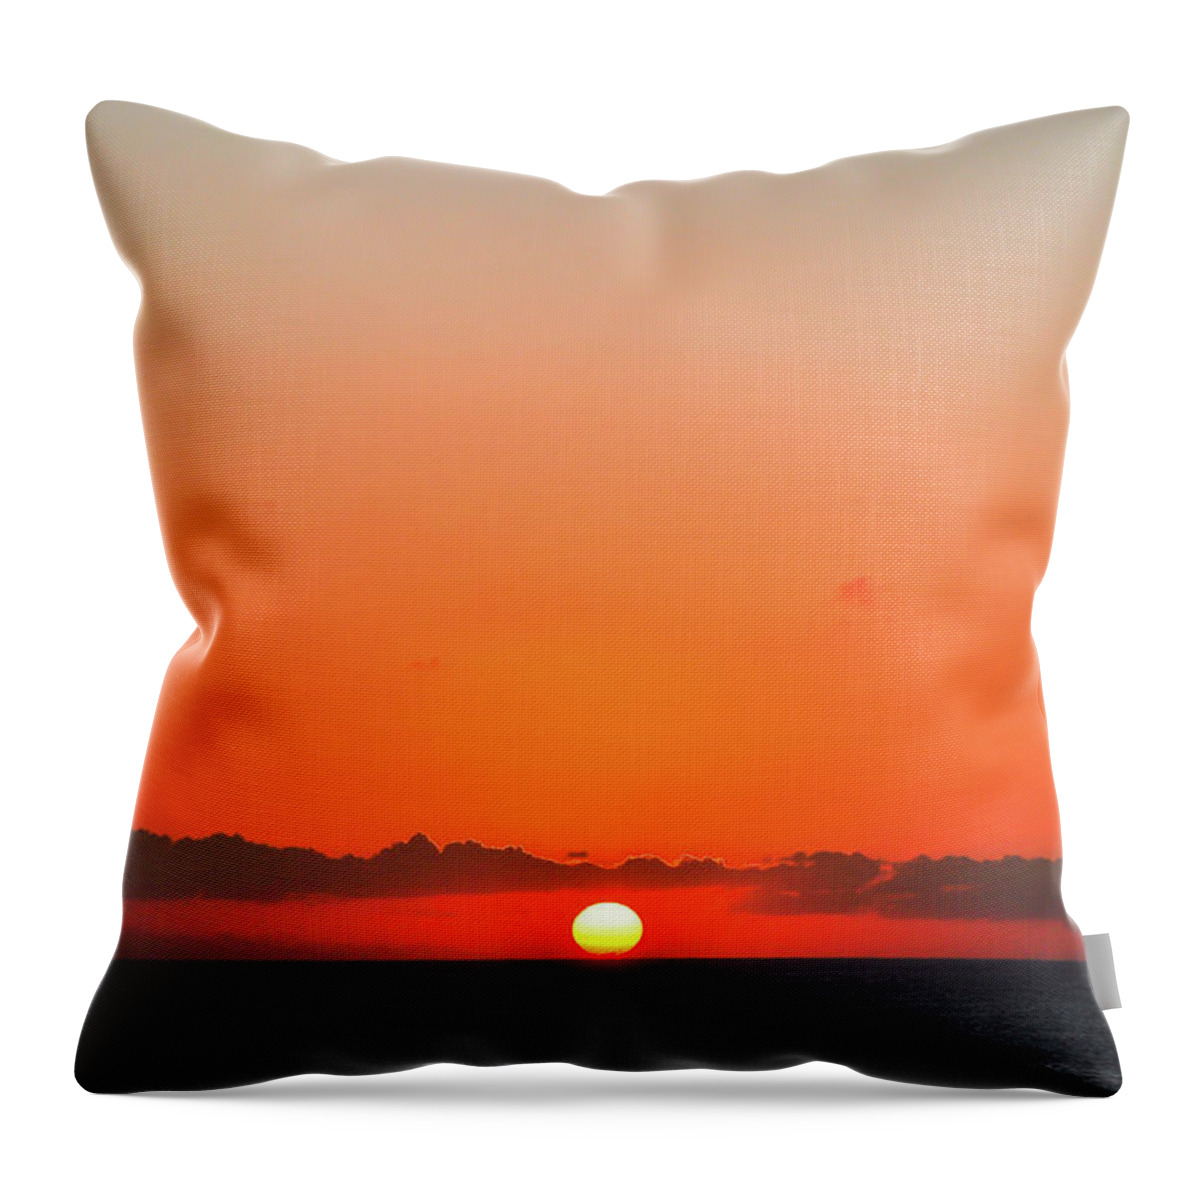 Caribbean Throw Pillow featuring the photograph Sun Balancing on the Horizon by Joel Thai